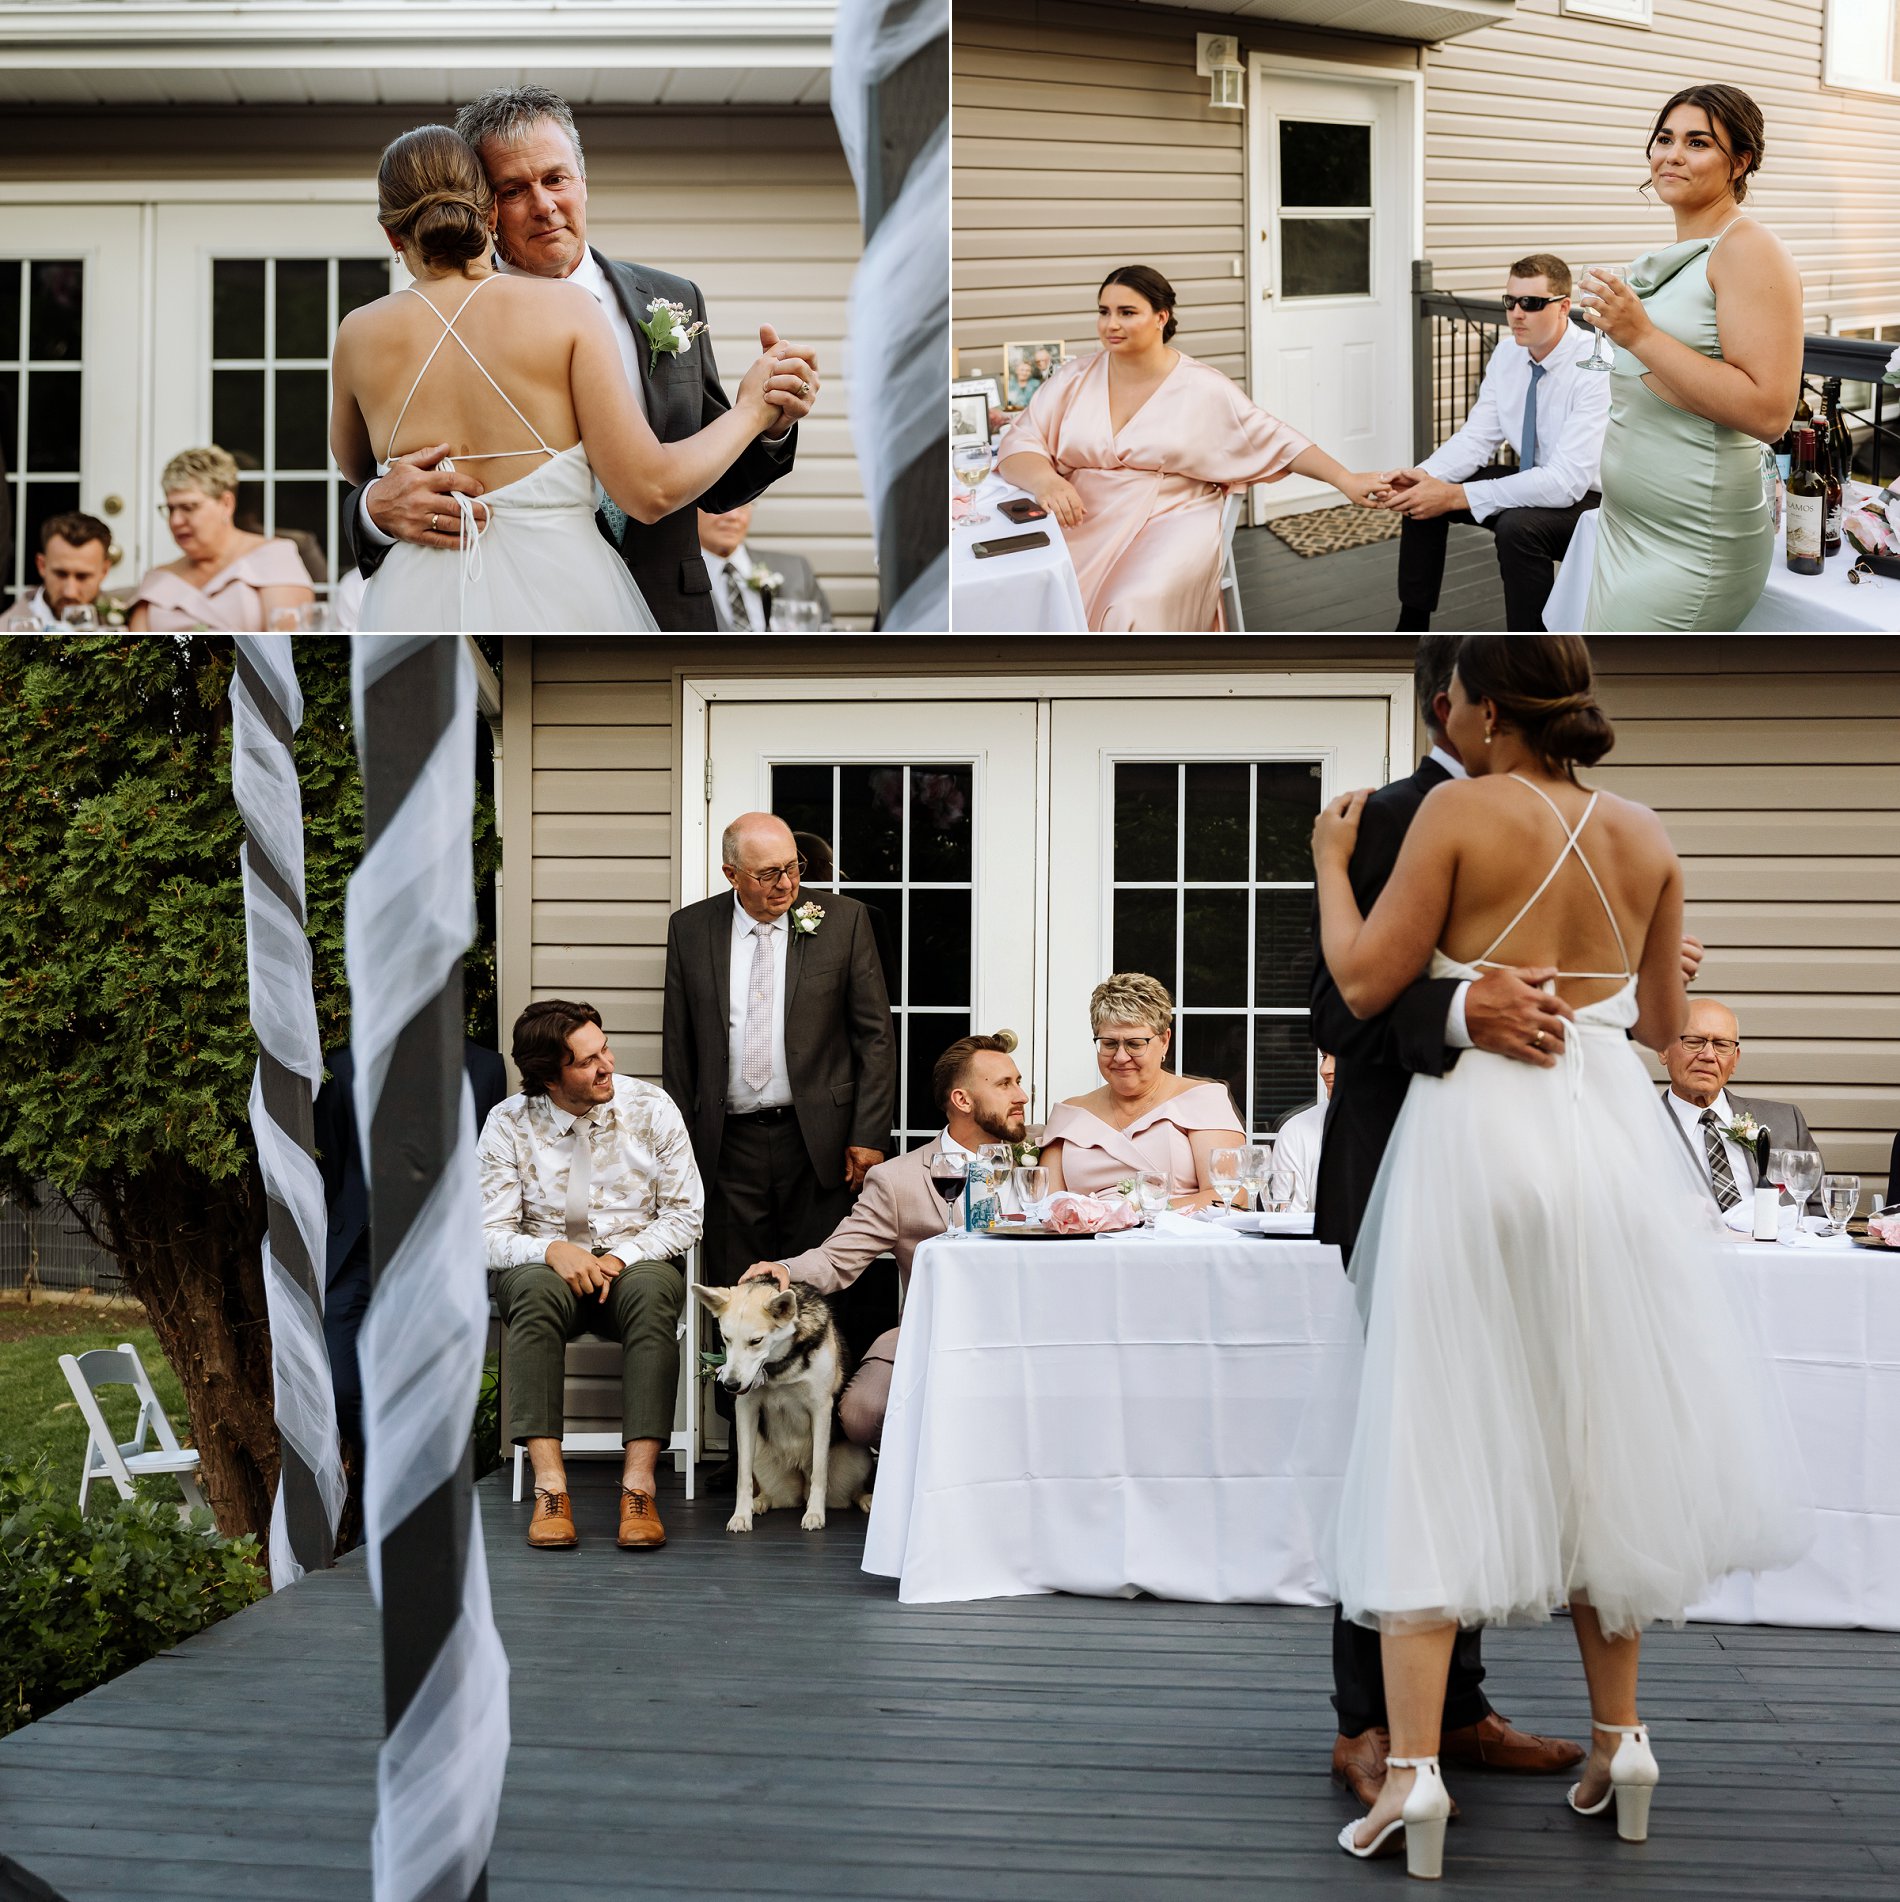 An emotional father-daughter dance on the deck at a Saskatoon wedding.